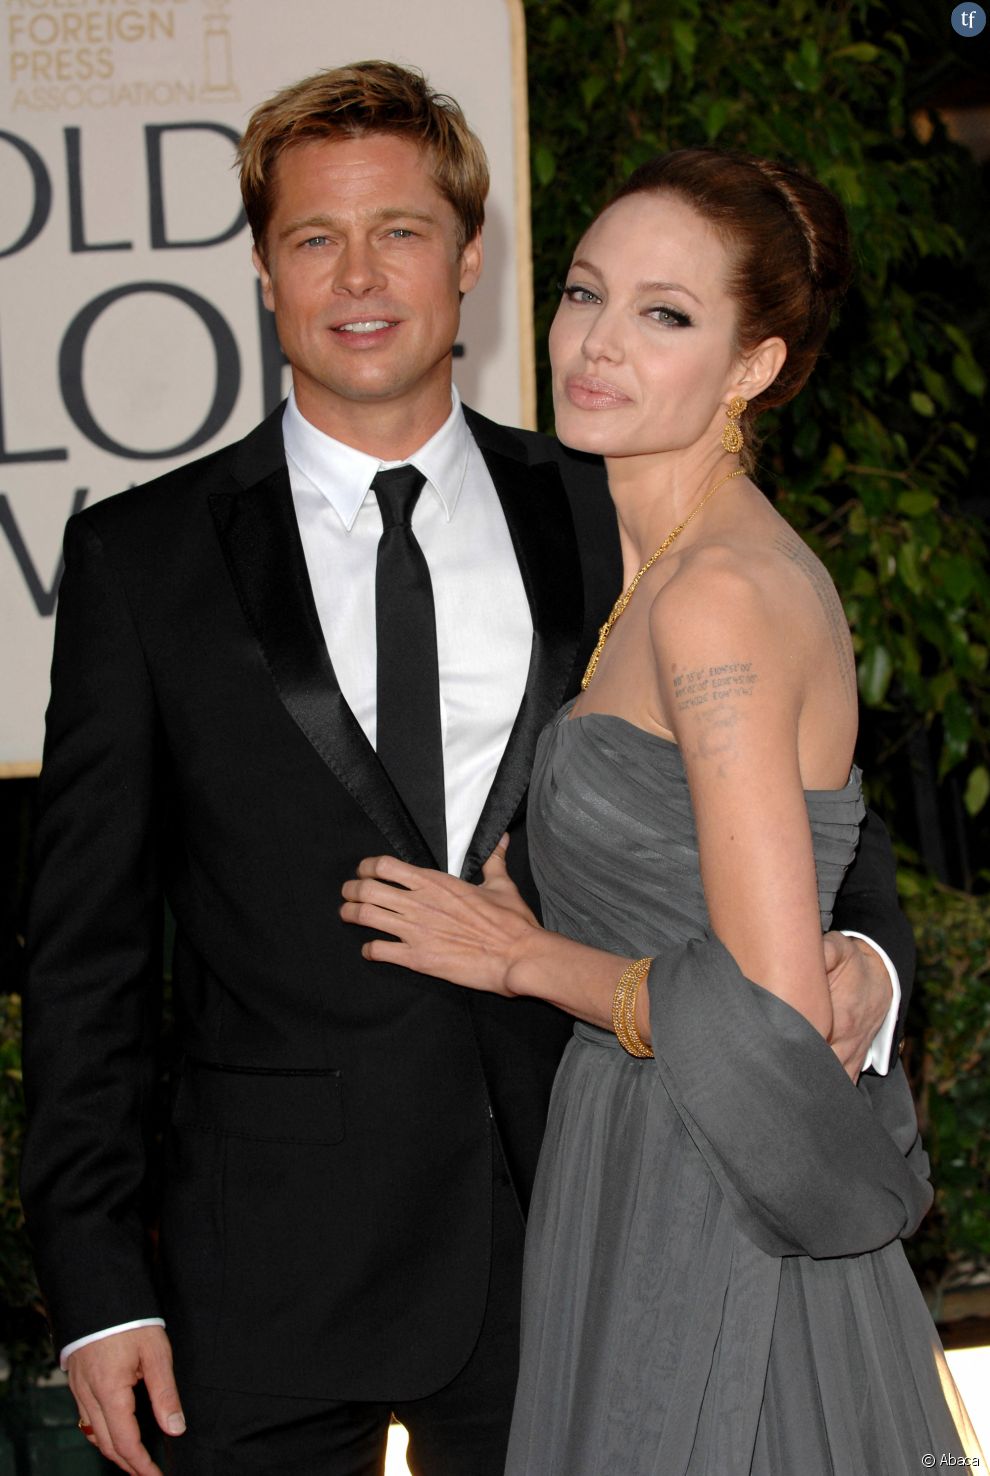  Angelina Jolie et Brad Pitt aux Golden Globes en janvier 2007 